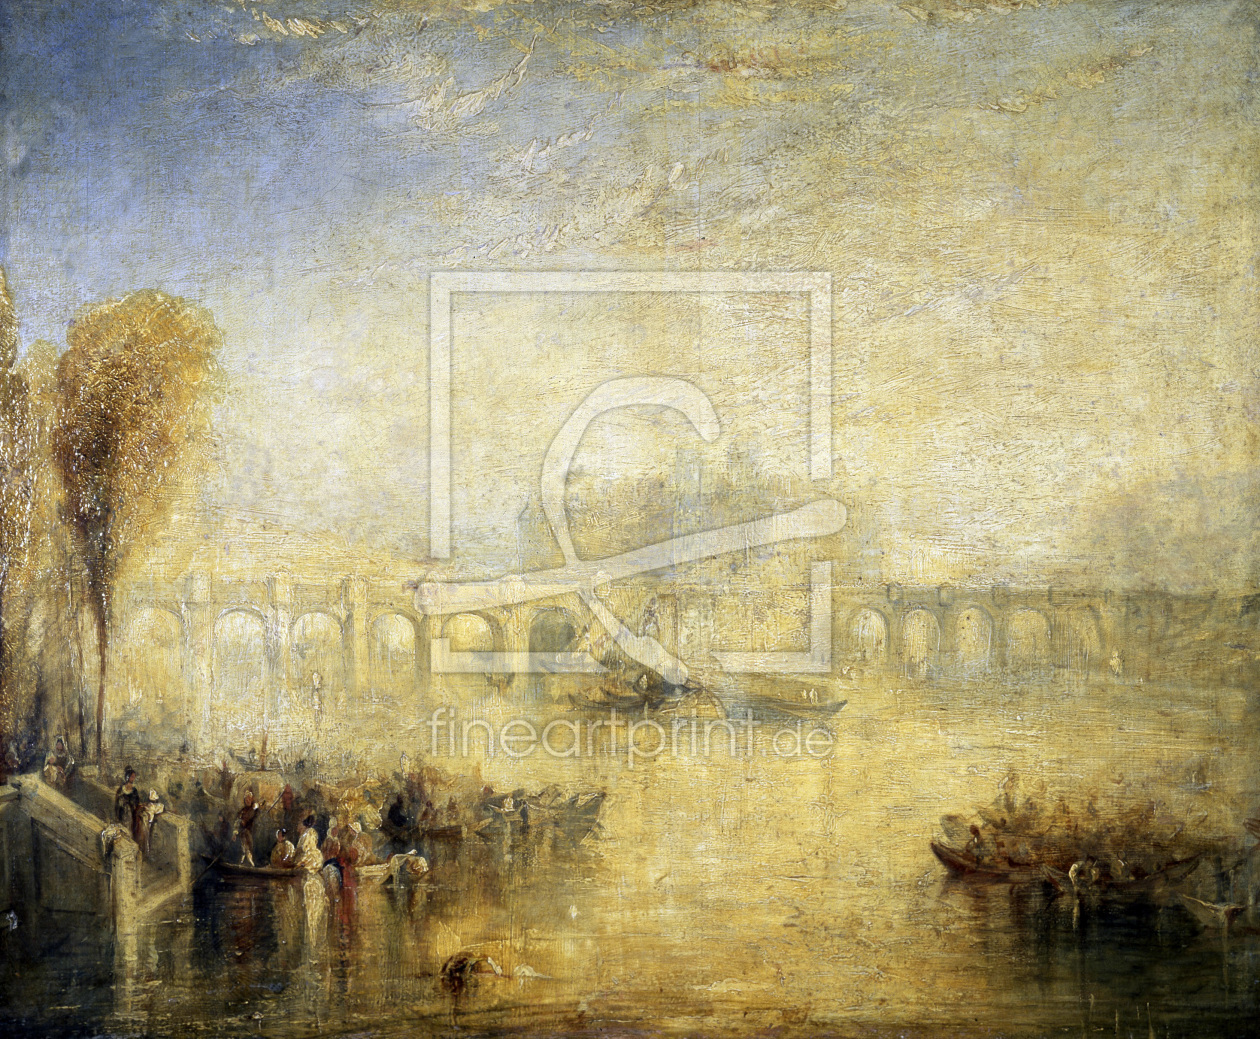 Bild-Nr.: 30008179 Paris/Pont Neuf/Painting/Turner erstellt von Turner, Joseph Mallord William